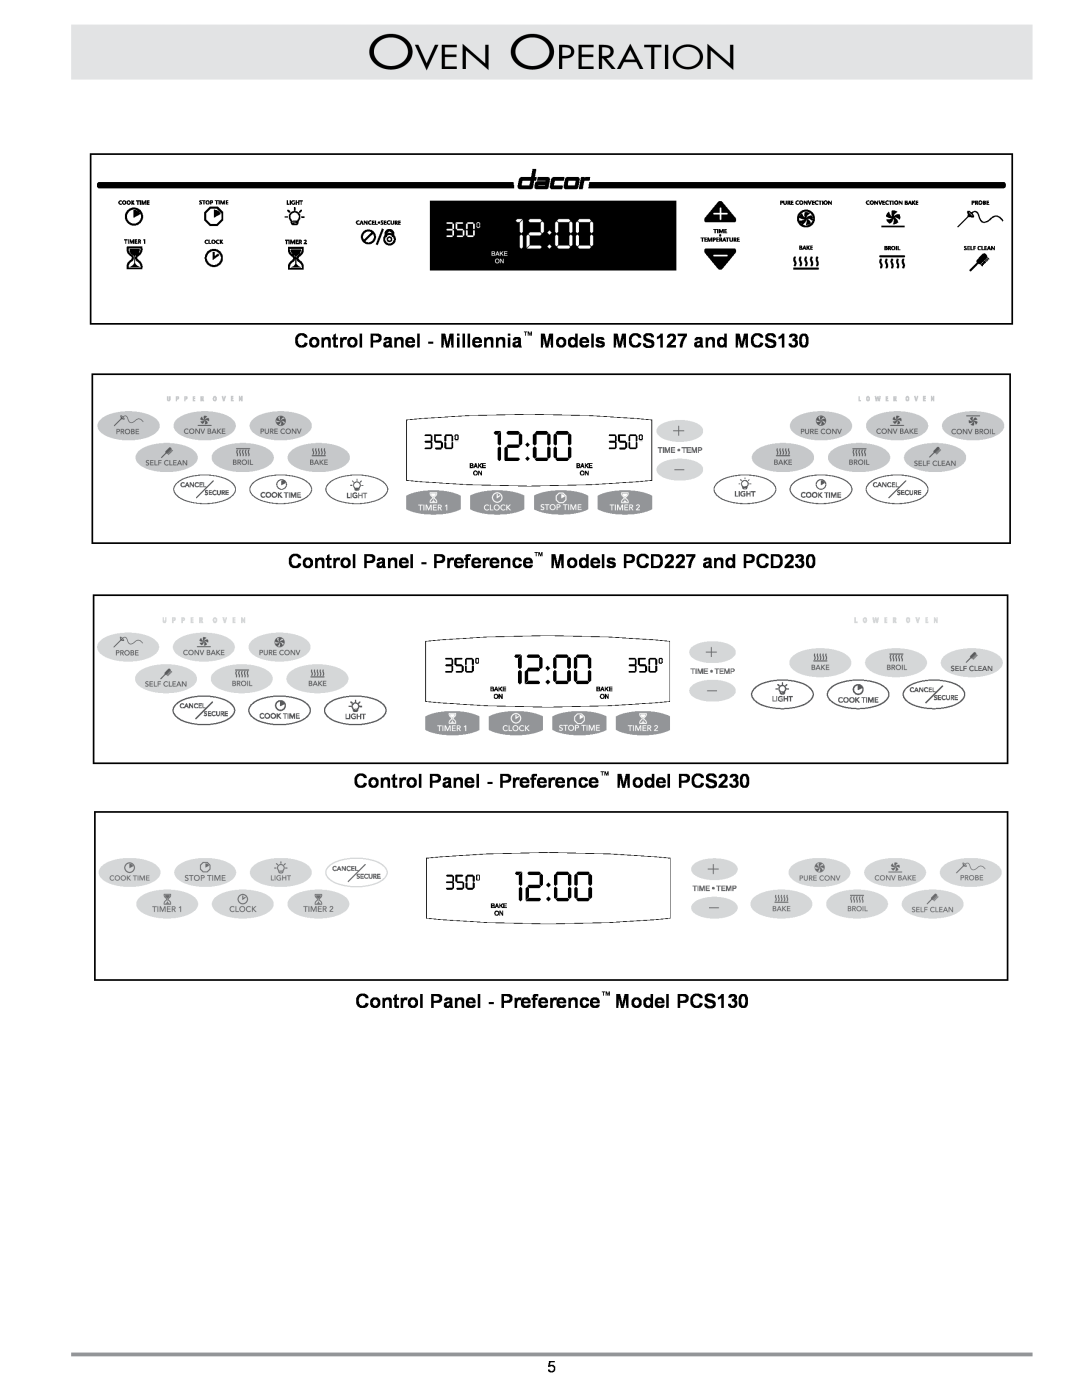 GE ECS, ECD Oven Operation, Control Panel - Millennia Models MCS127 and MCS130, Control Panel - Preference Model PCS230 